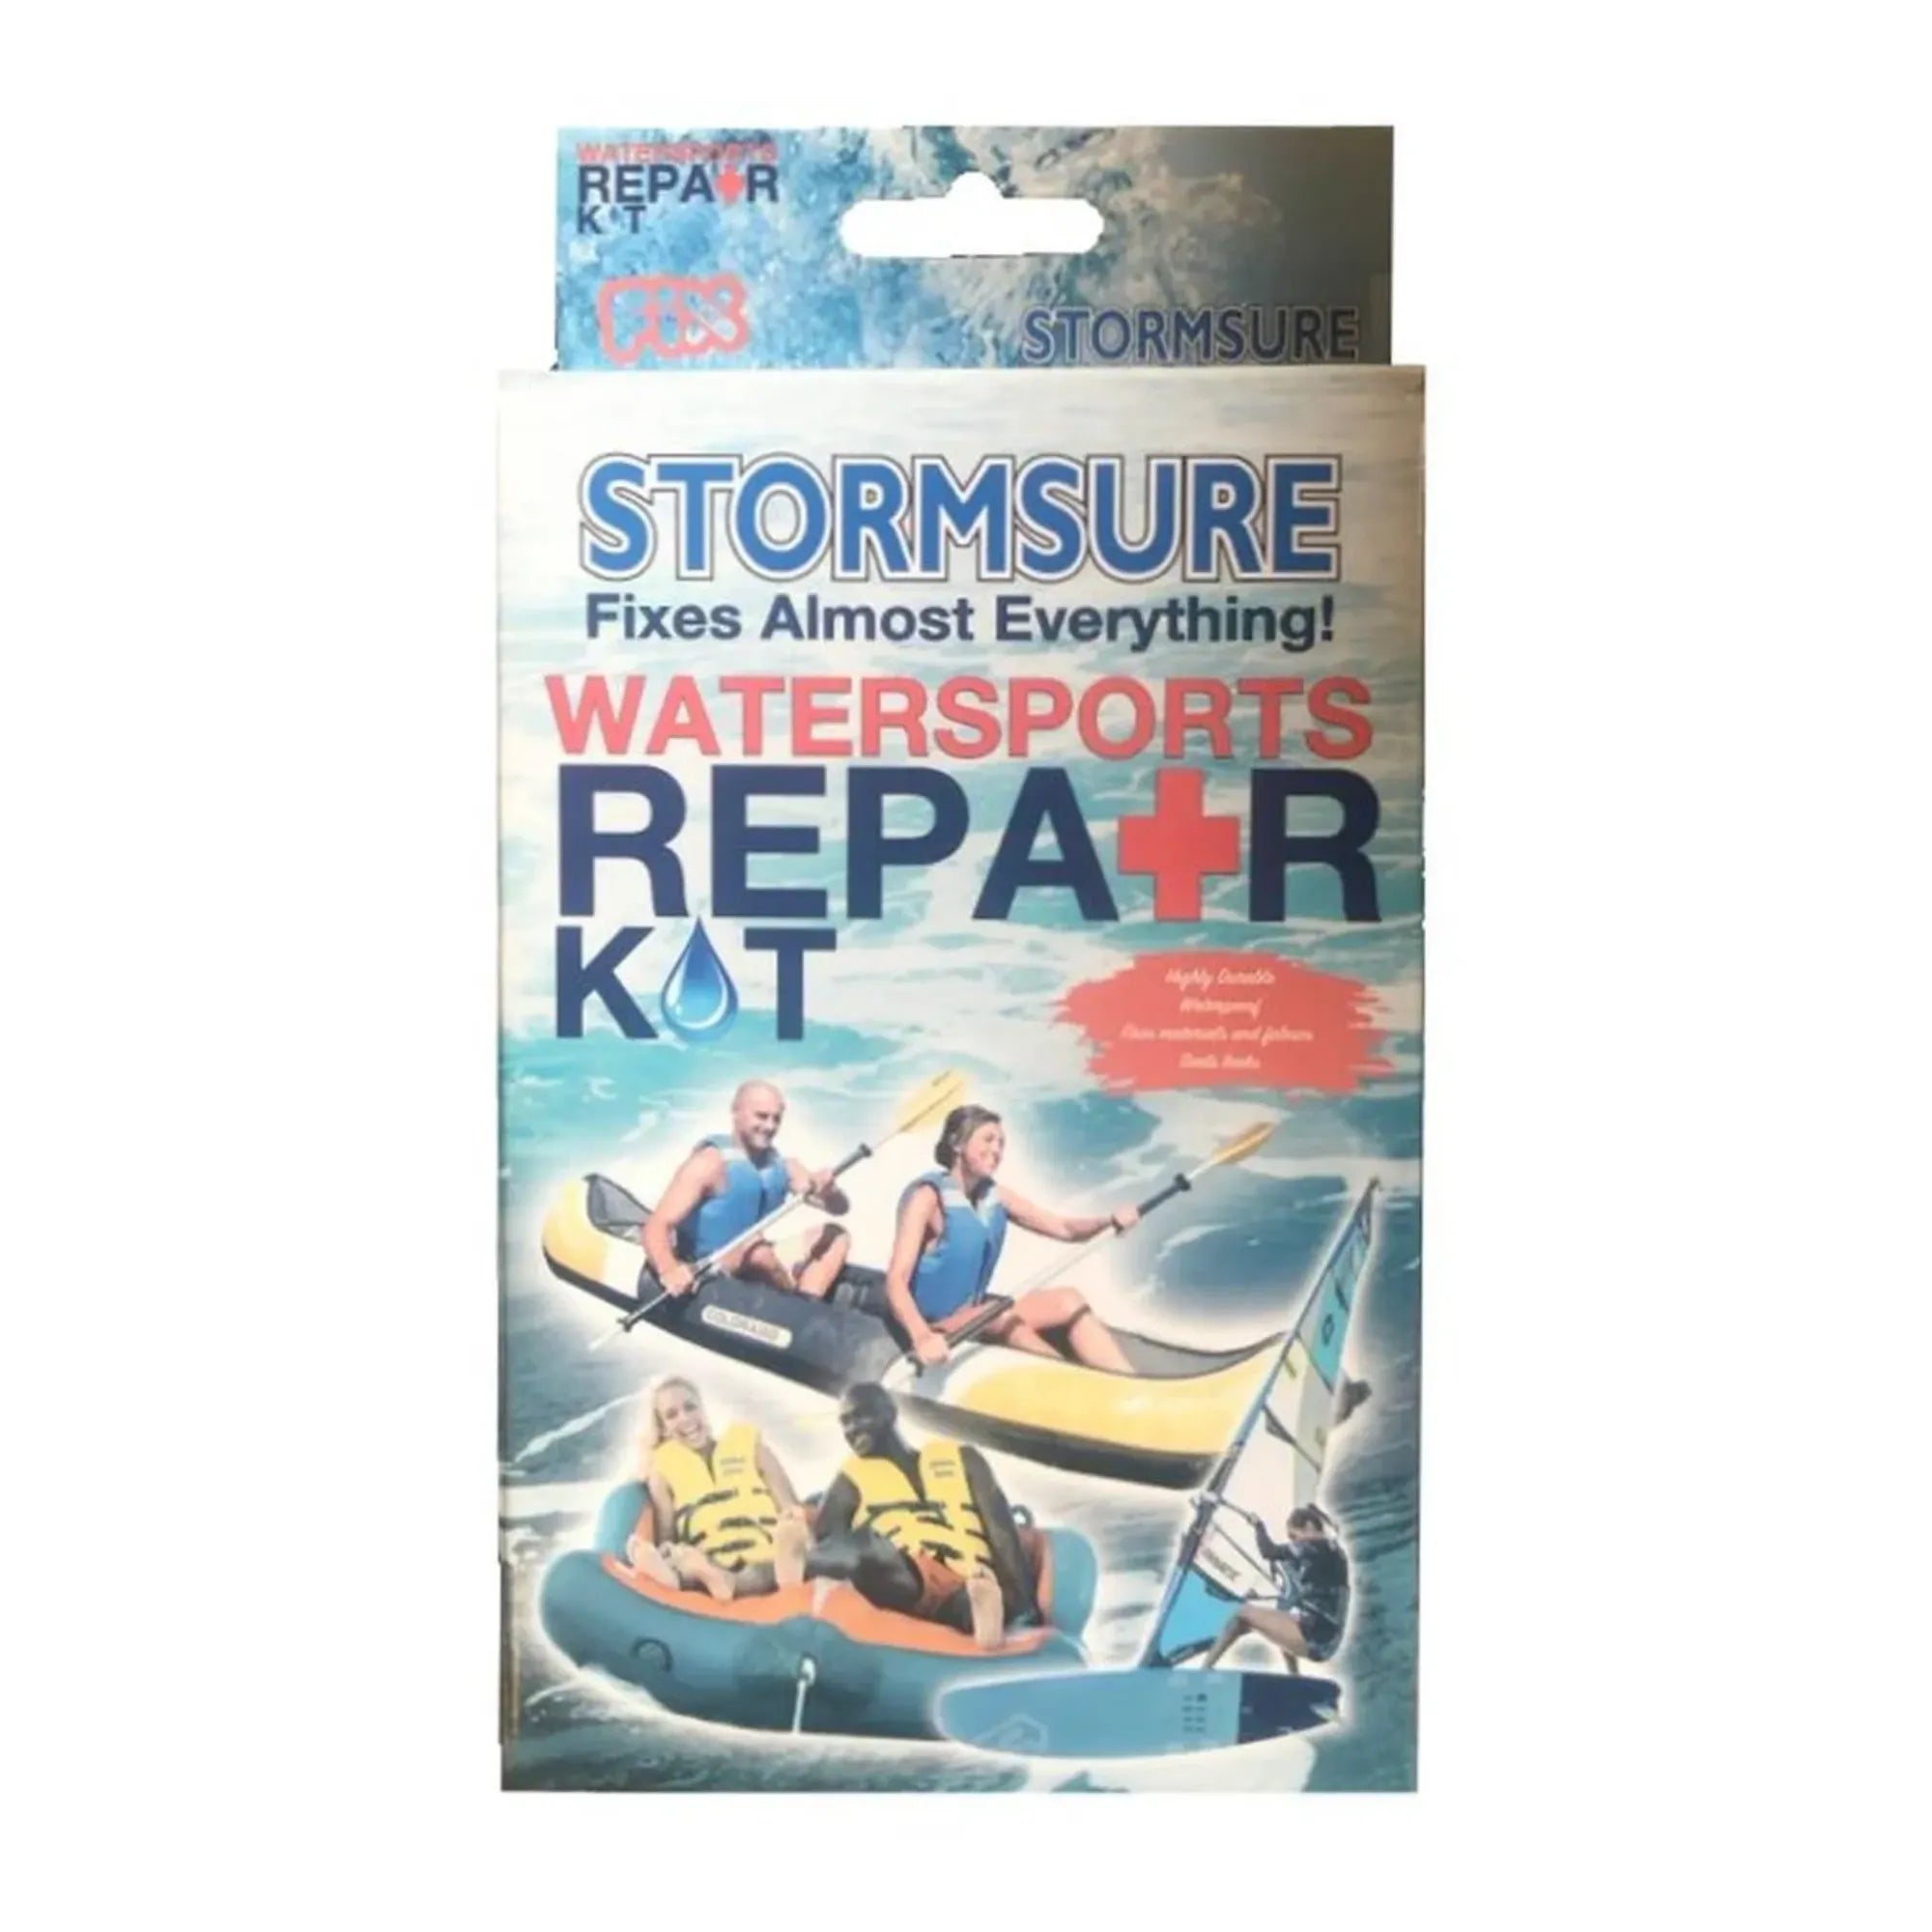 Watersports Repair Kit